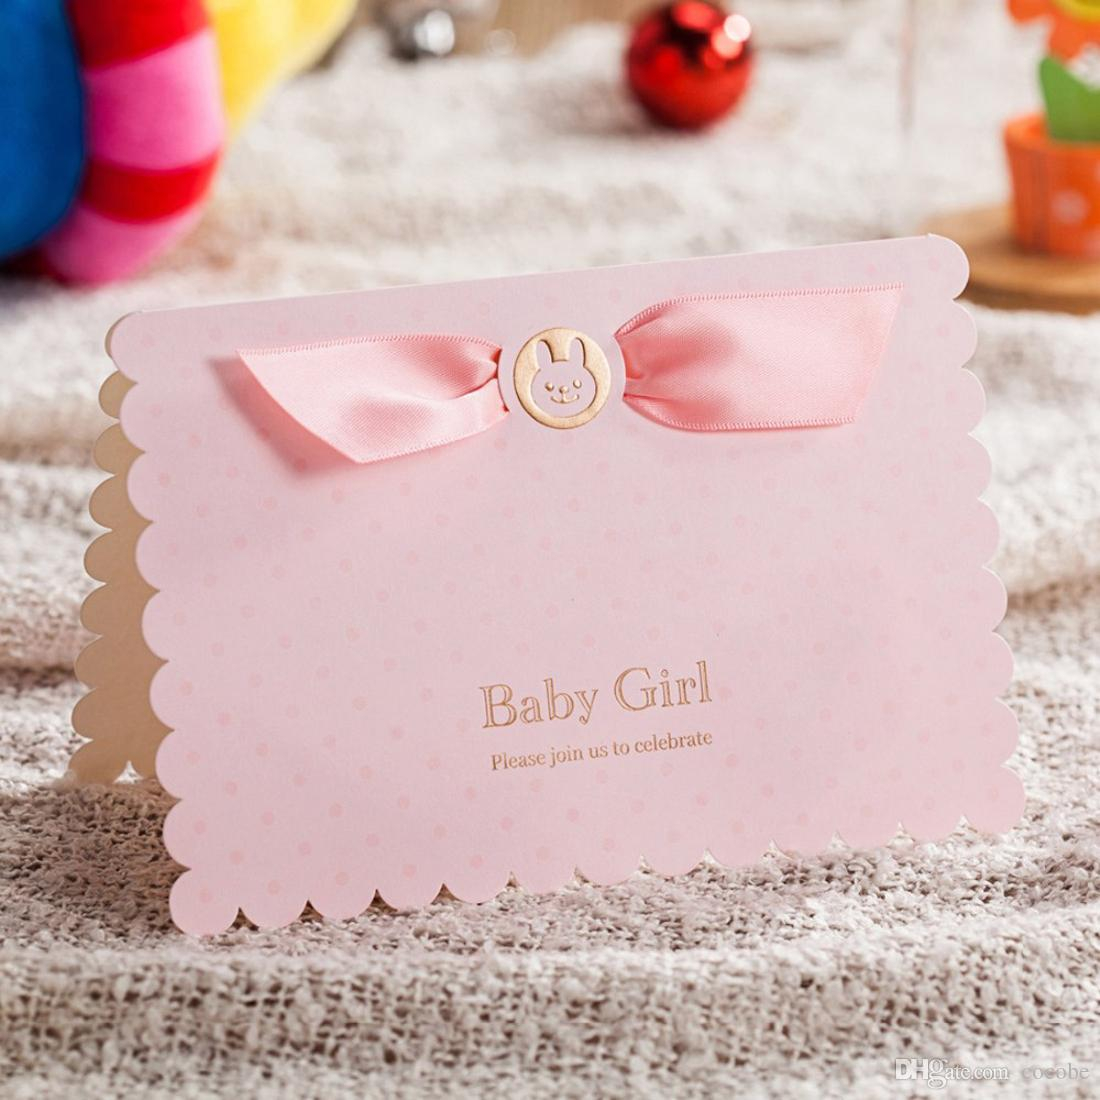 Handmade Birthday Invitation Card Ideas Wishmade Pink Blue Ba Shower Invitation Cards With Cute Ba Car Invites Card Kit For Boy Girl Birthday Cw5301